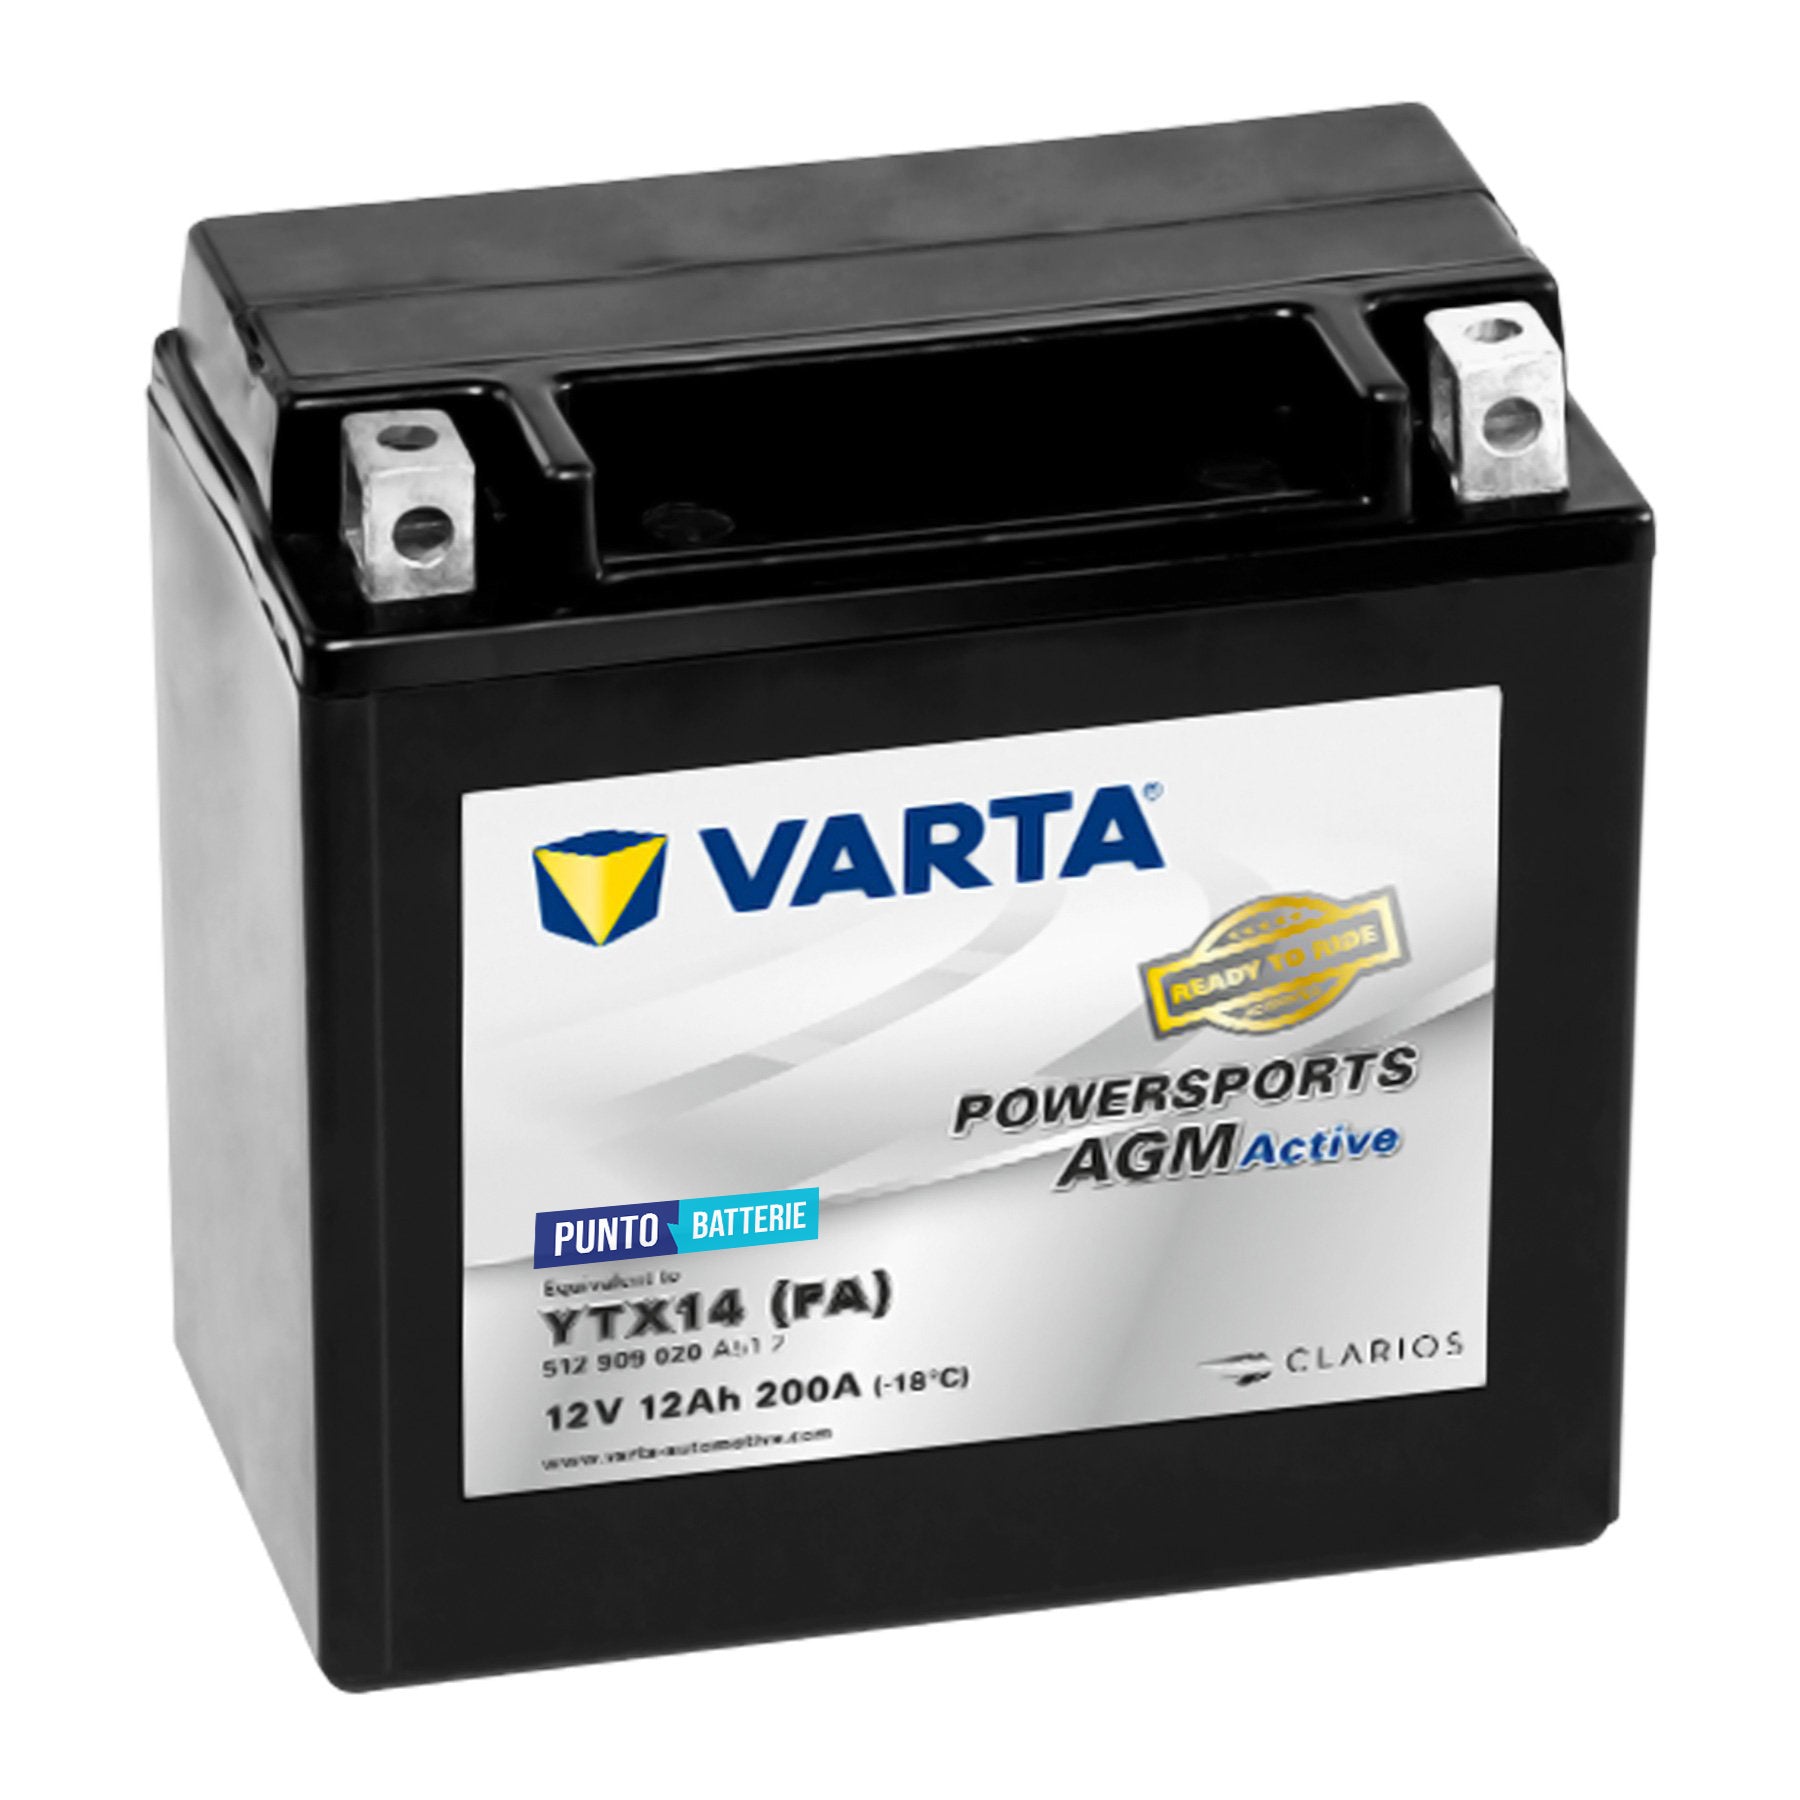 Batteria originale Varta Powersport AGM Active YTX14-FA, dimensioni 150 x 87 x 130, polo positivo a sinistra, 12 volt, 12 amperora, 200 ampere. Batteria per moto, scooter e powersport.